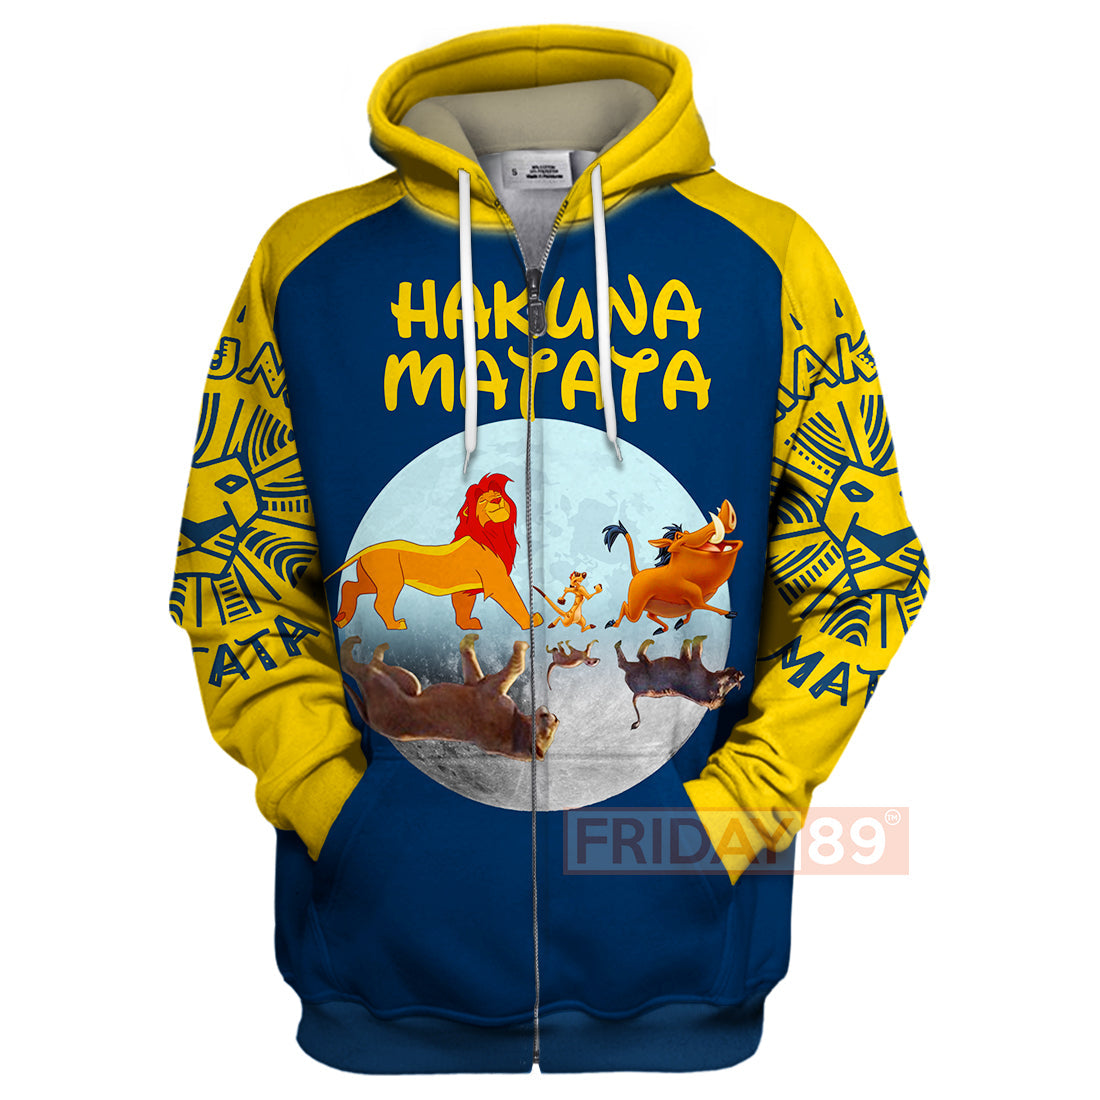 Unifinz LK T-shirt In The Moon - Hakuna Matata T-shirt Awesome DN LK Hoodie Sweater Tank 026